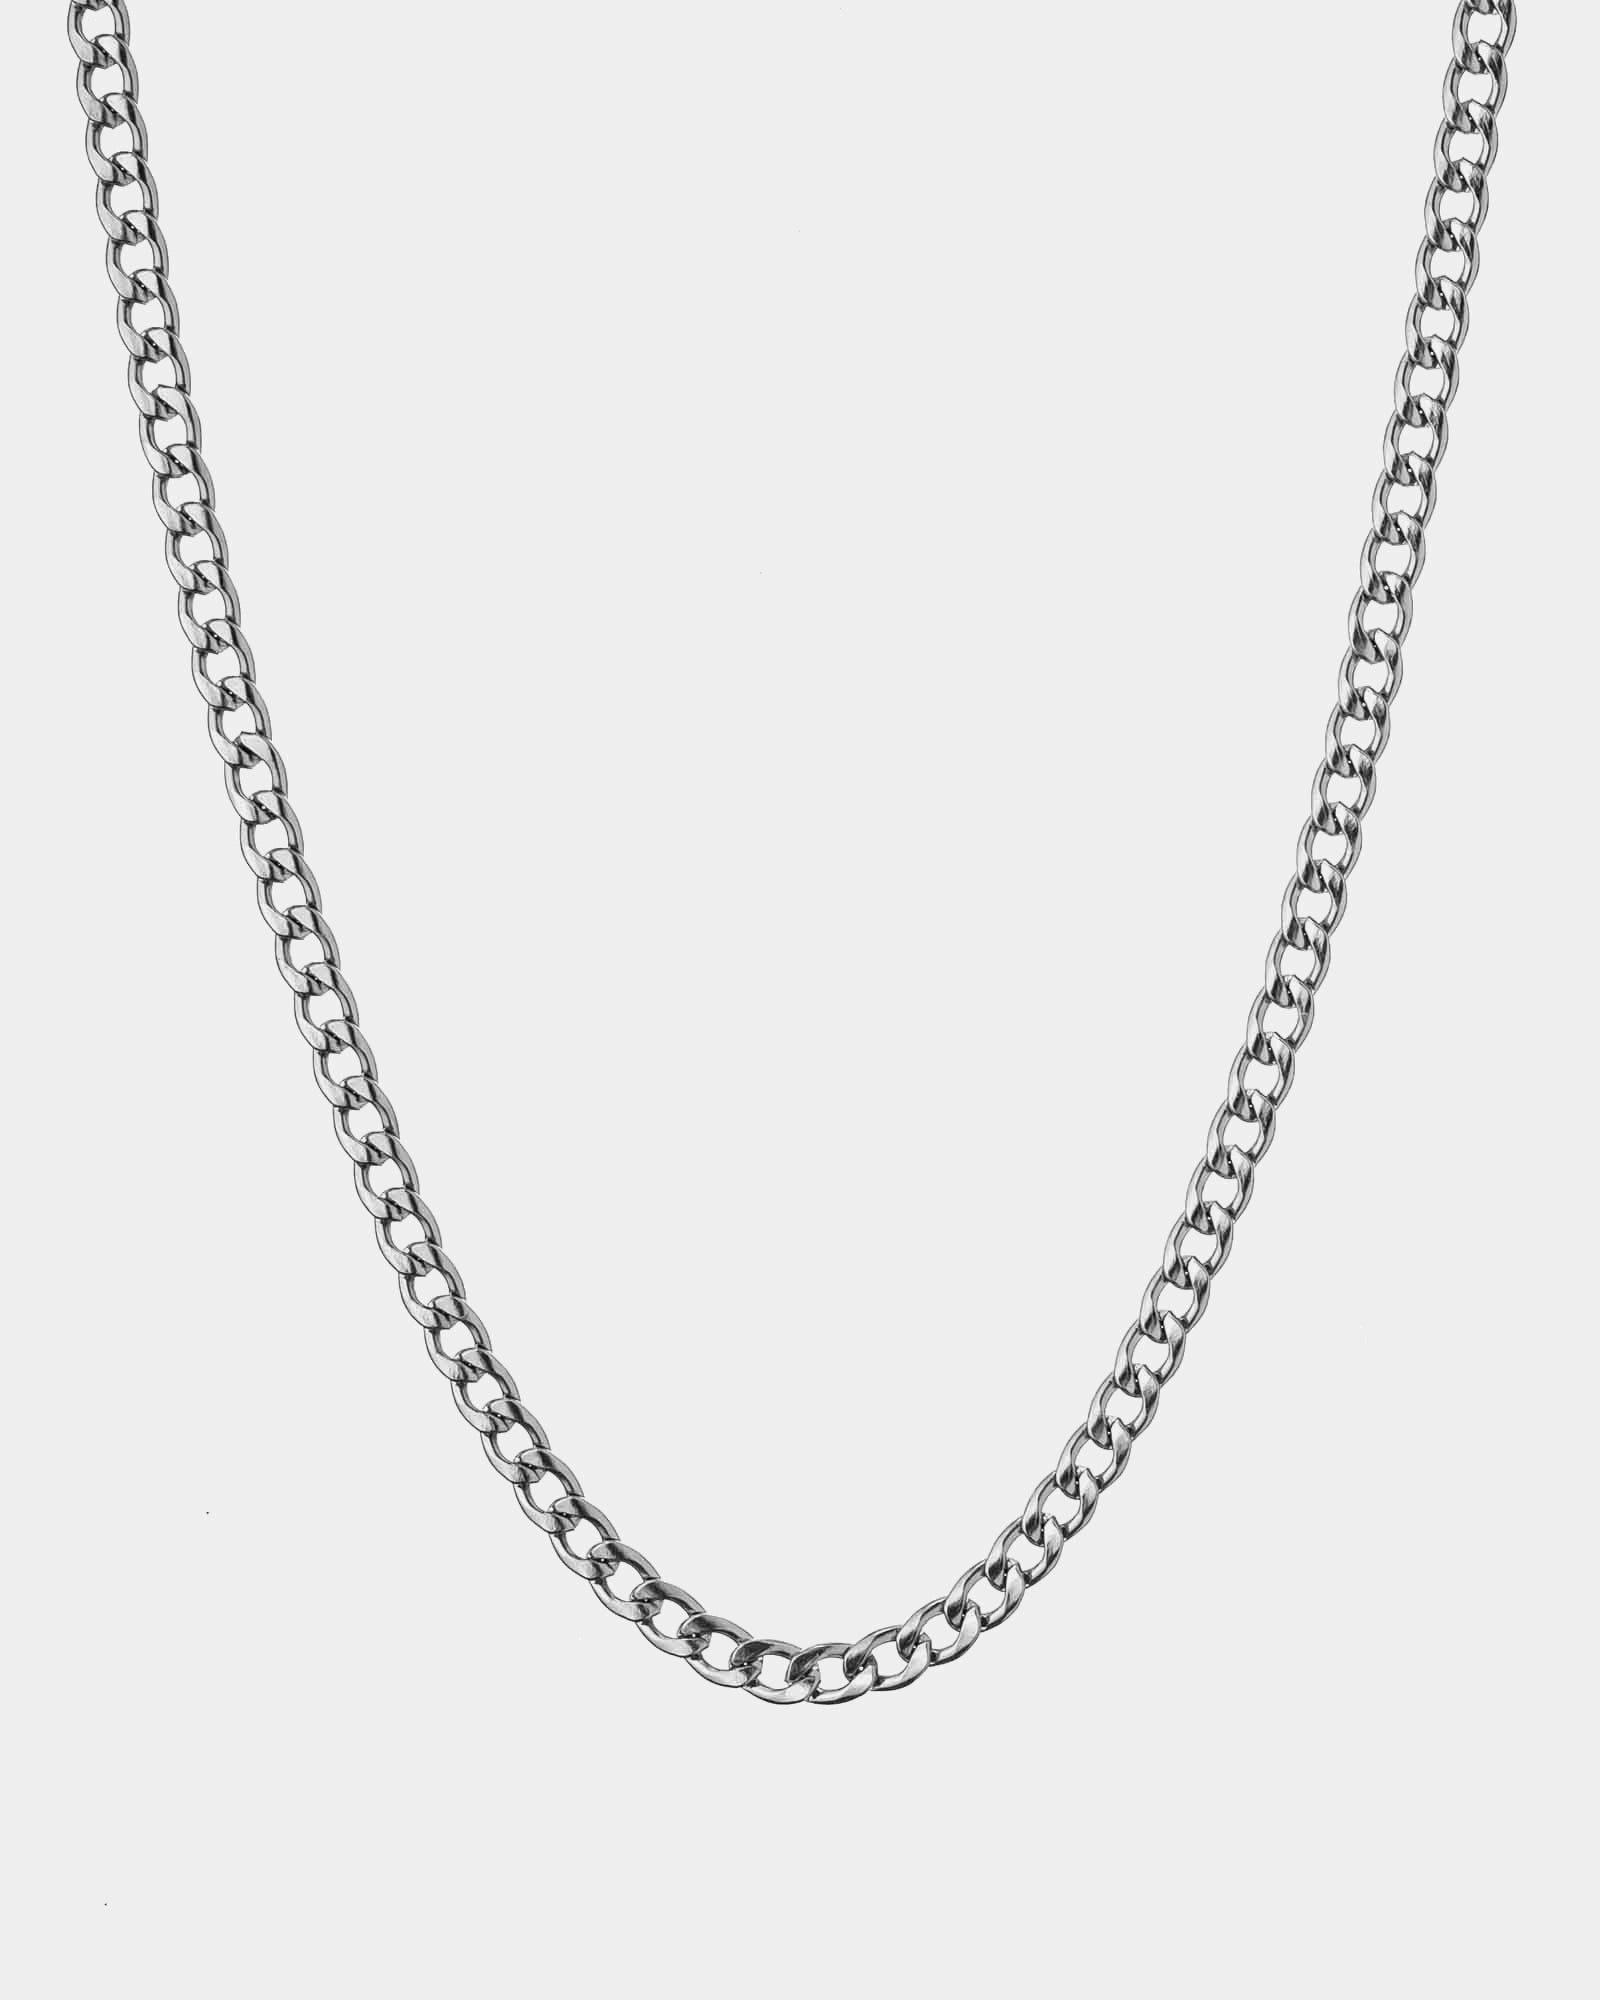 Jordan - Stainless Steel Necklace 'Jordan' - Online Unisex Jewelry - Dicci